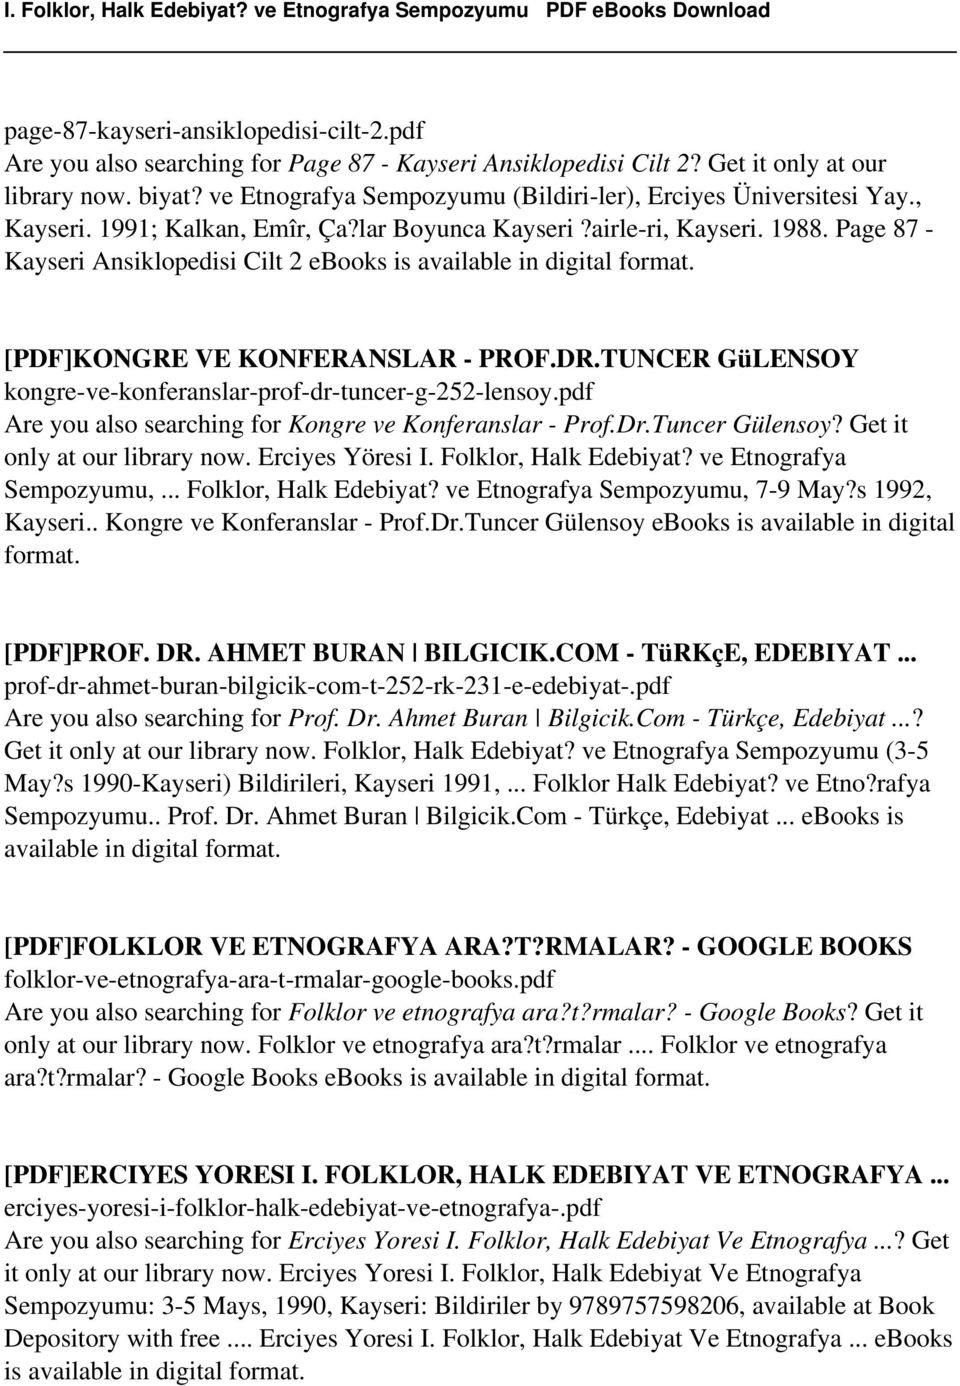 Page 87 - Kayseri Ansiklopedisi Cilt 2 ebooks is [PDF]KONGRE VE KONFERANSLAR - PROF.DR.TUNCER GüLENSOY kongre-ve-konferanslar-prof-dr-tuncer-g-252-lensoy.